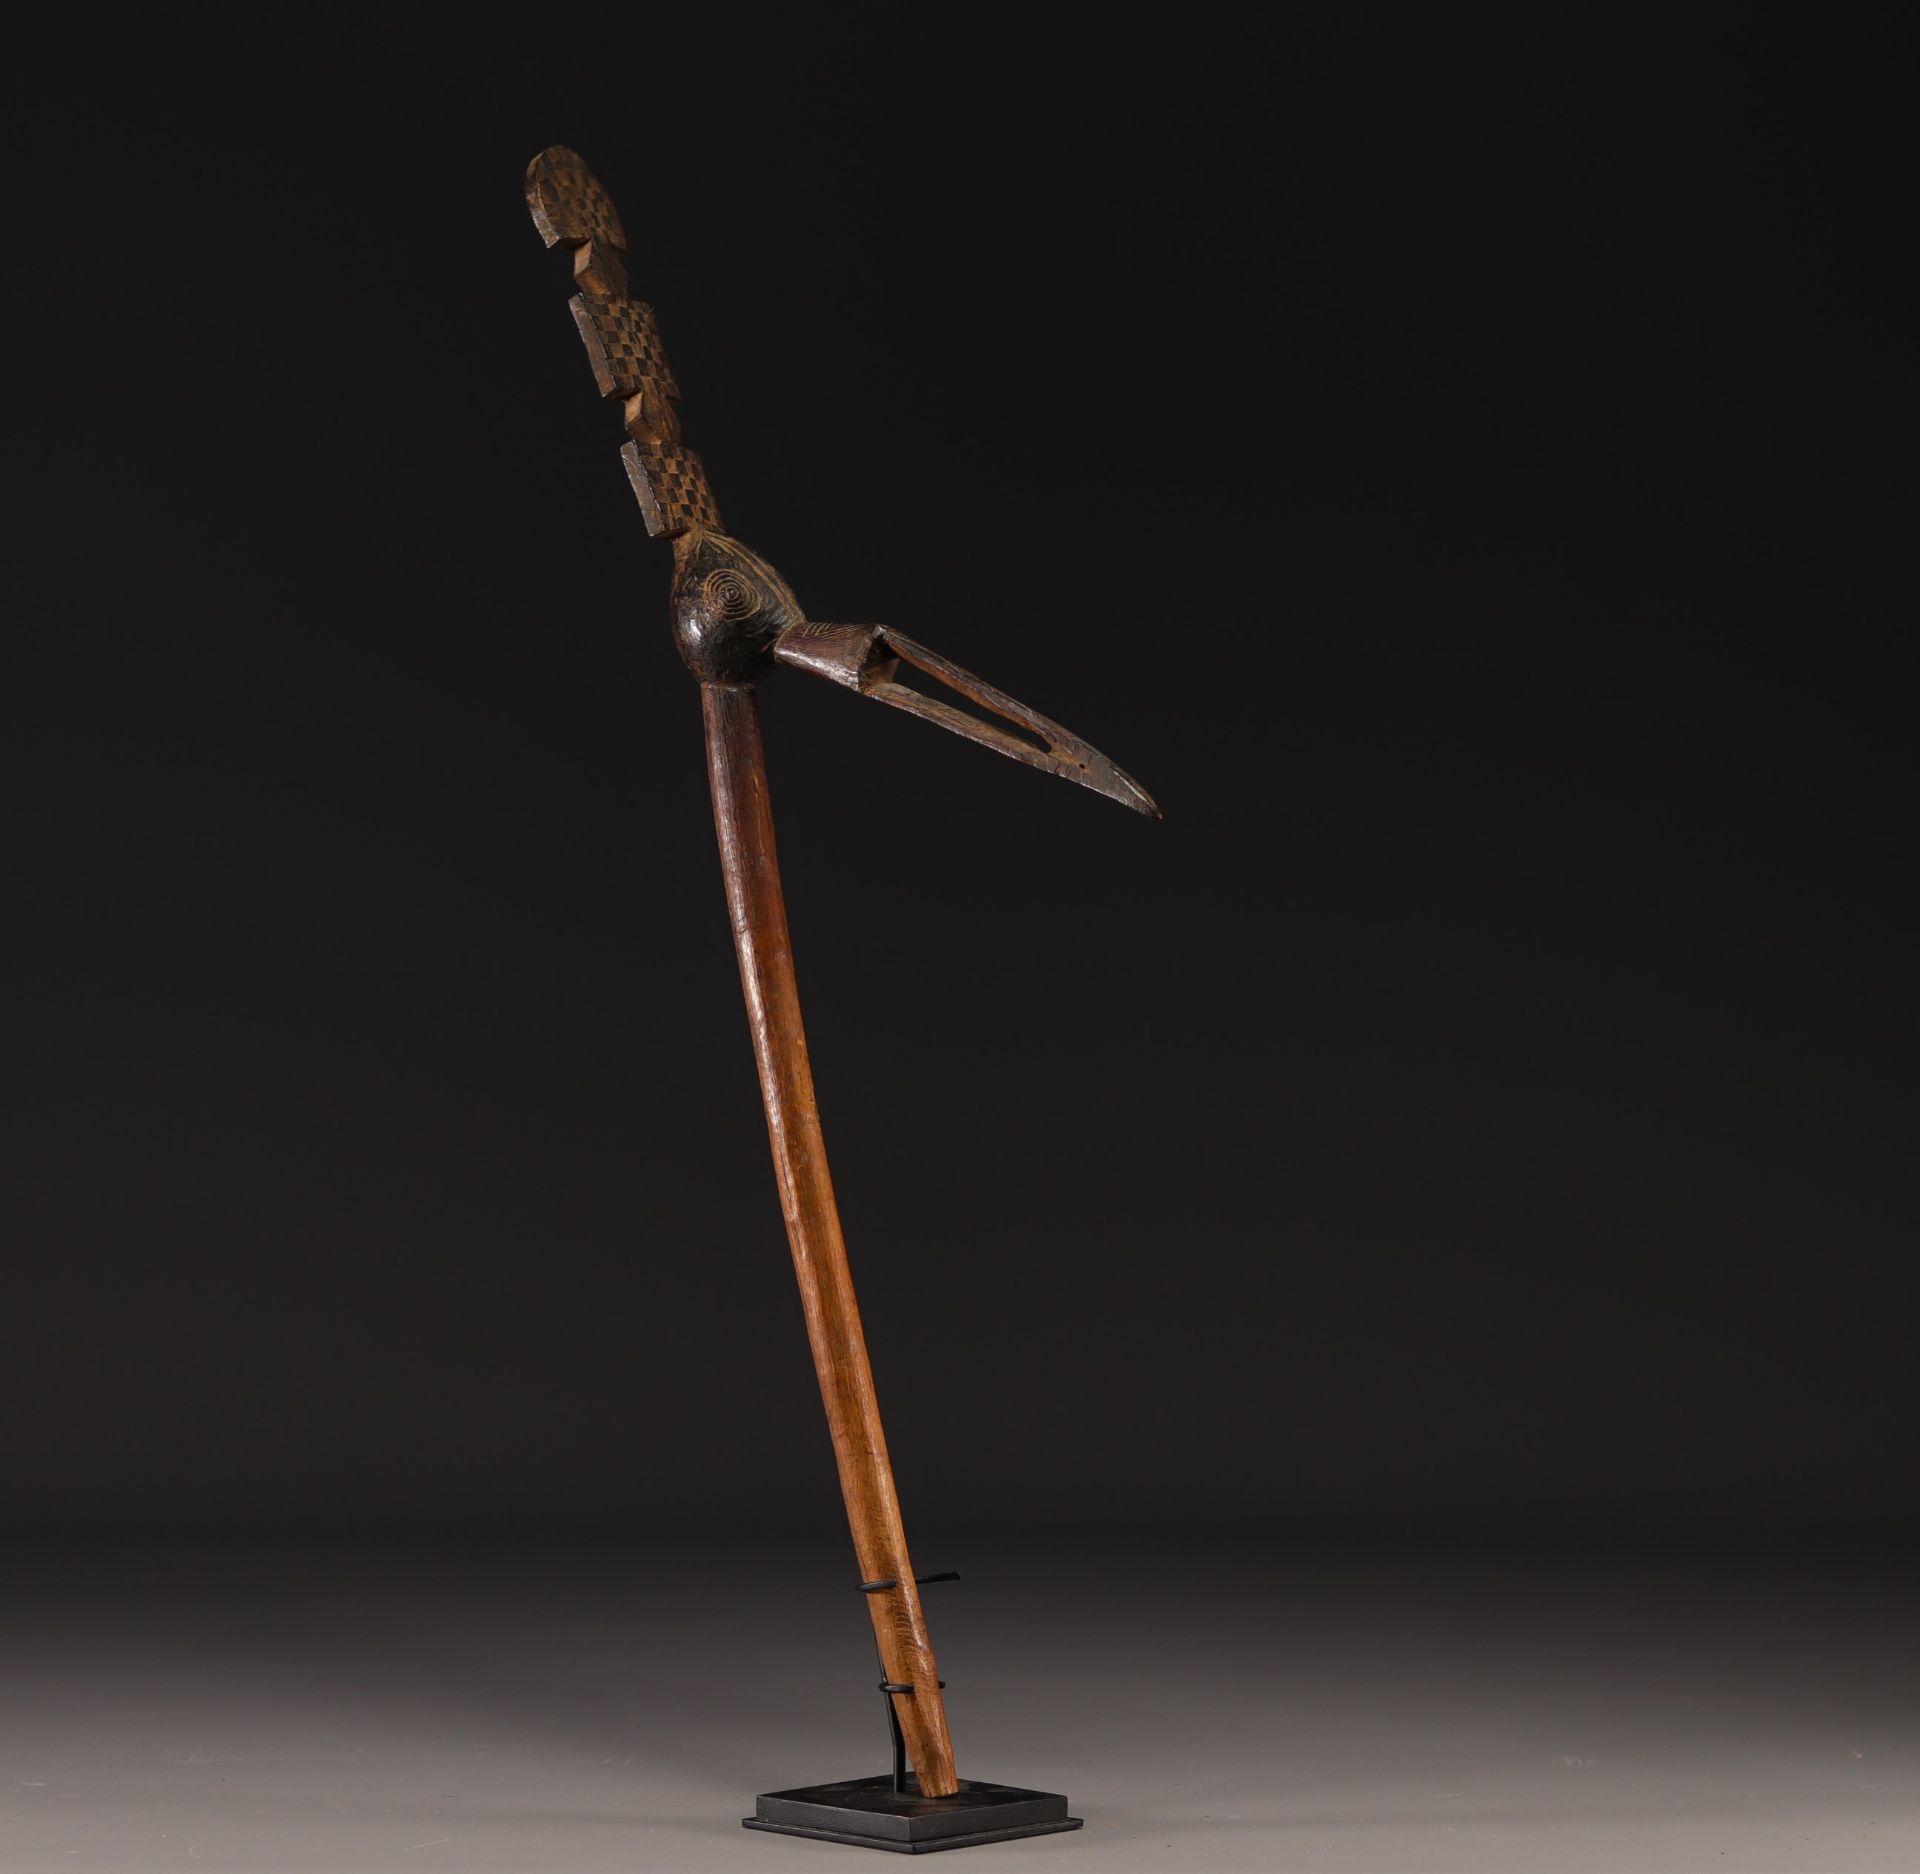 Prestige scepter - Ivory Coast